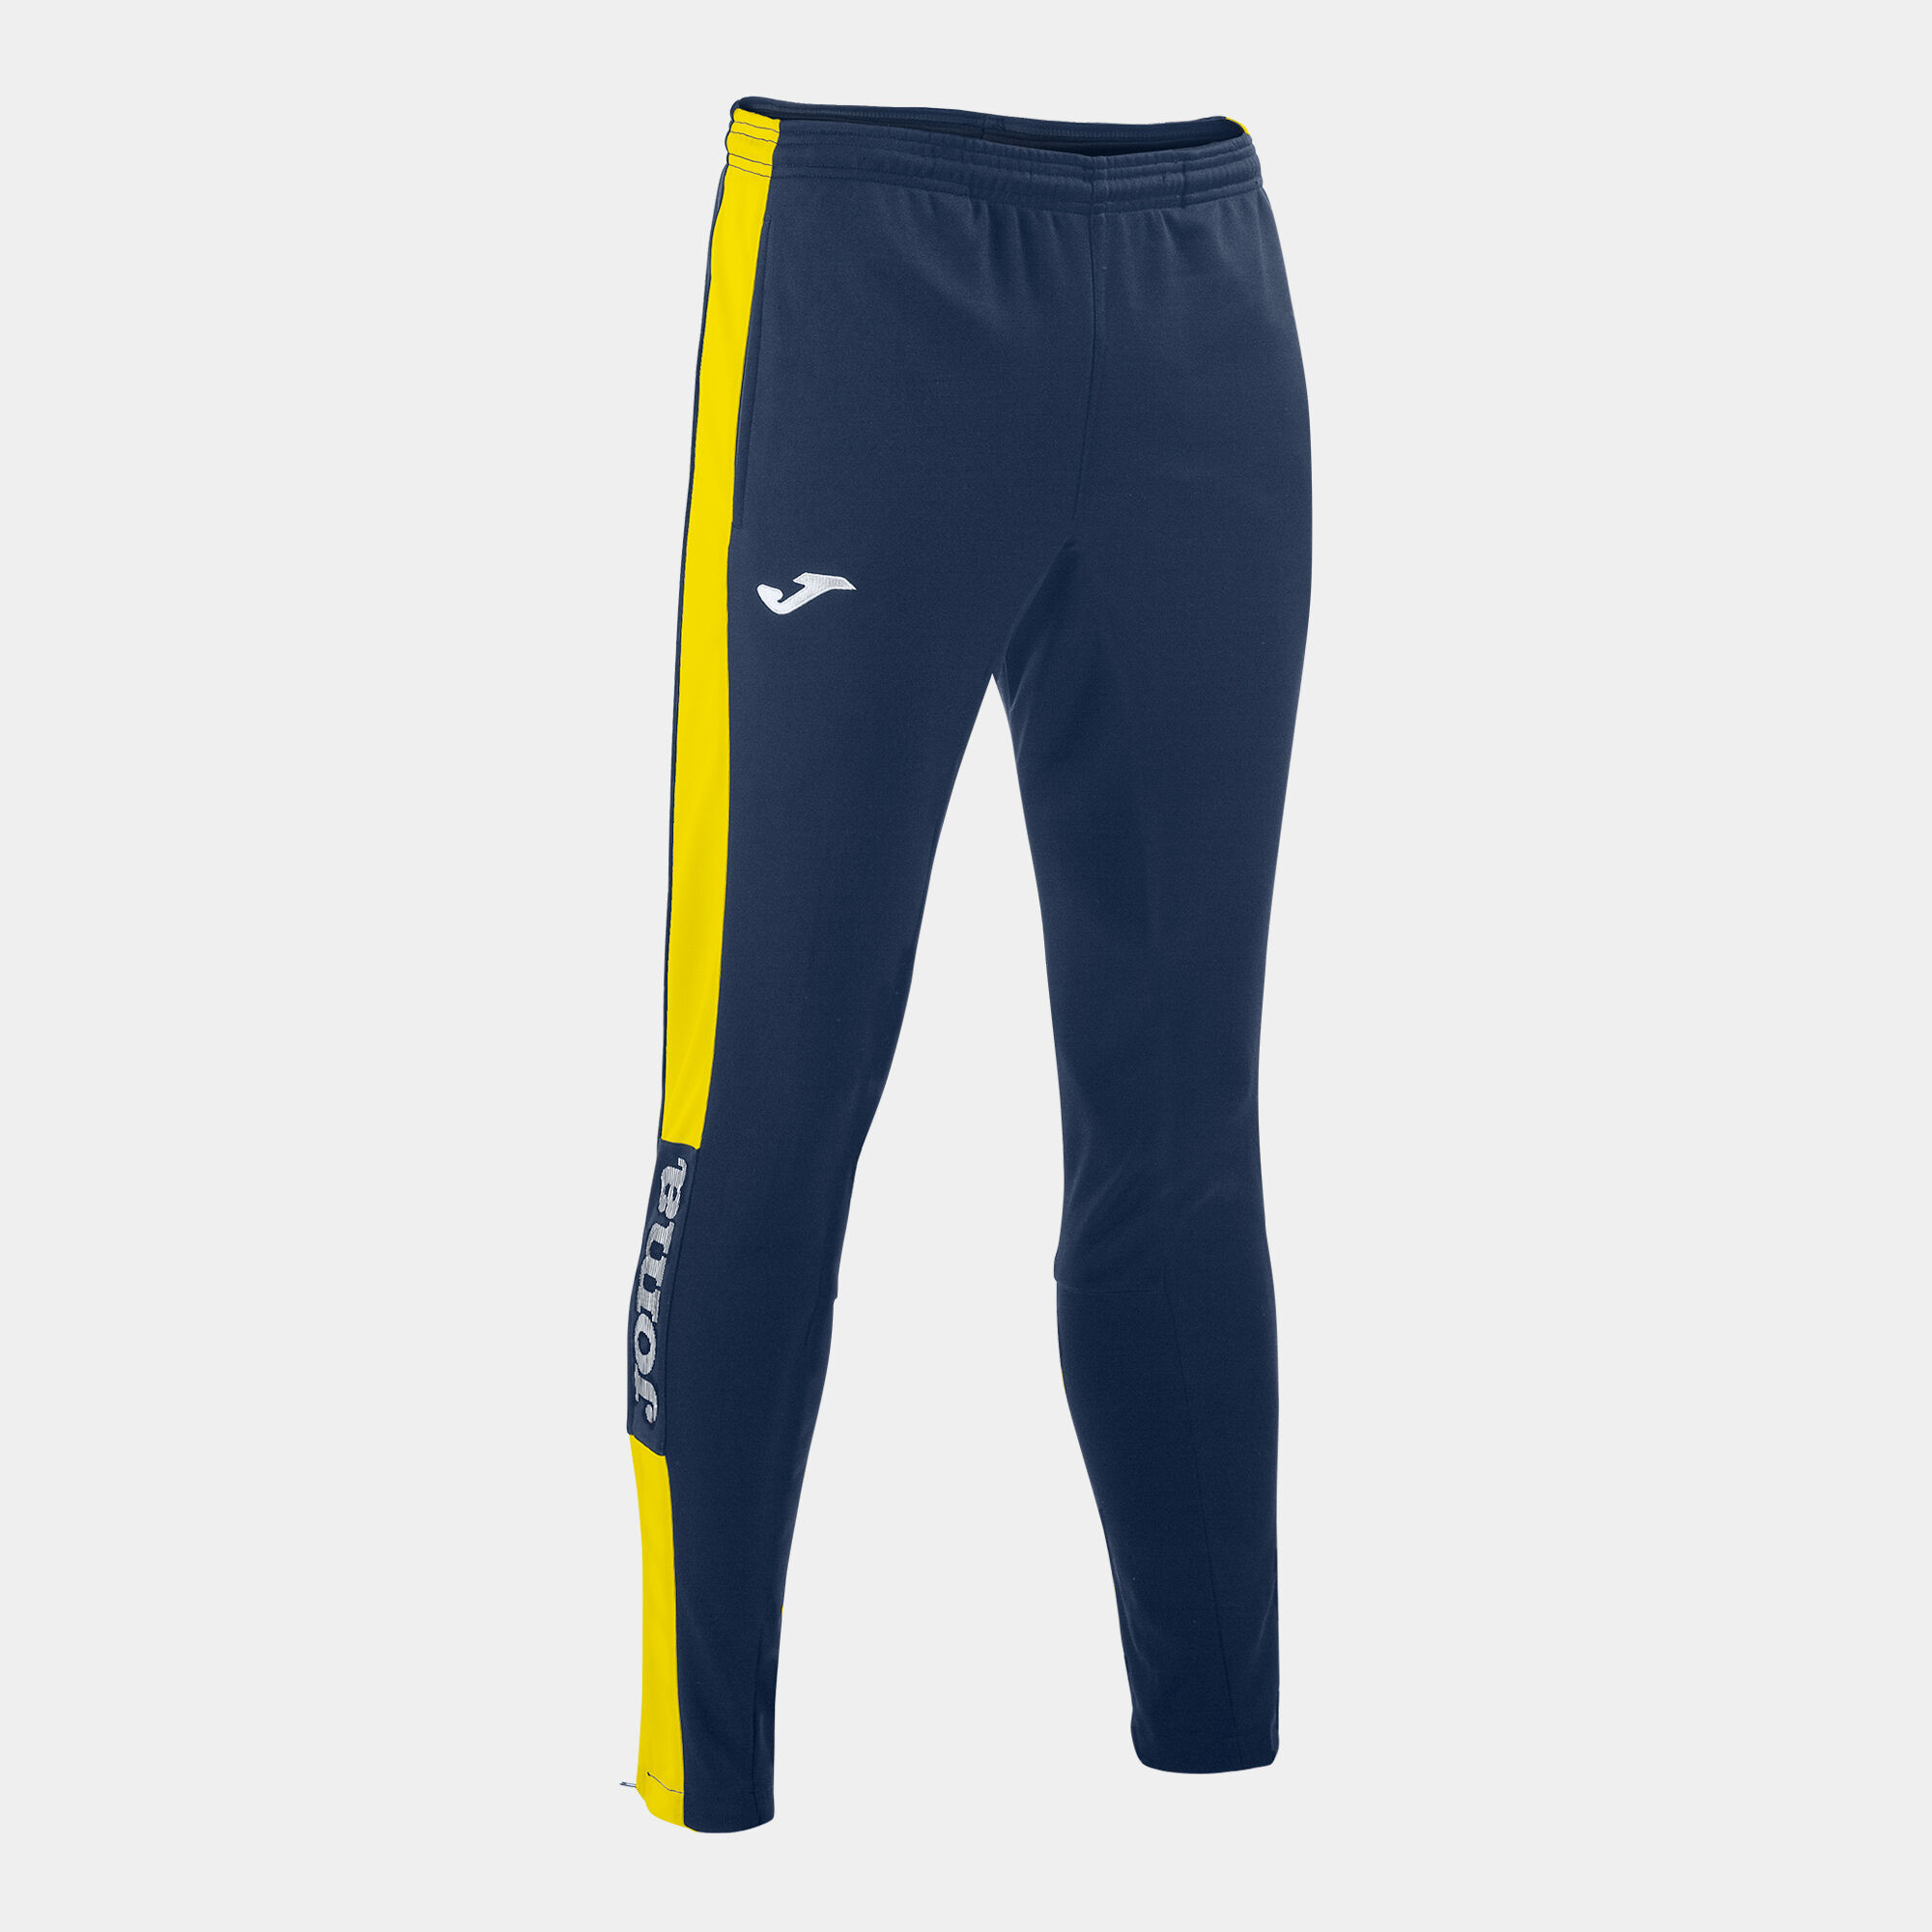 Longs pants man Championship IV navy blue yellow